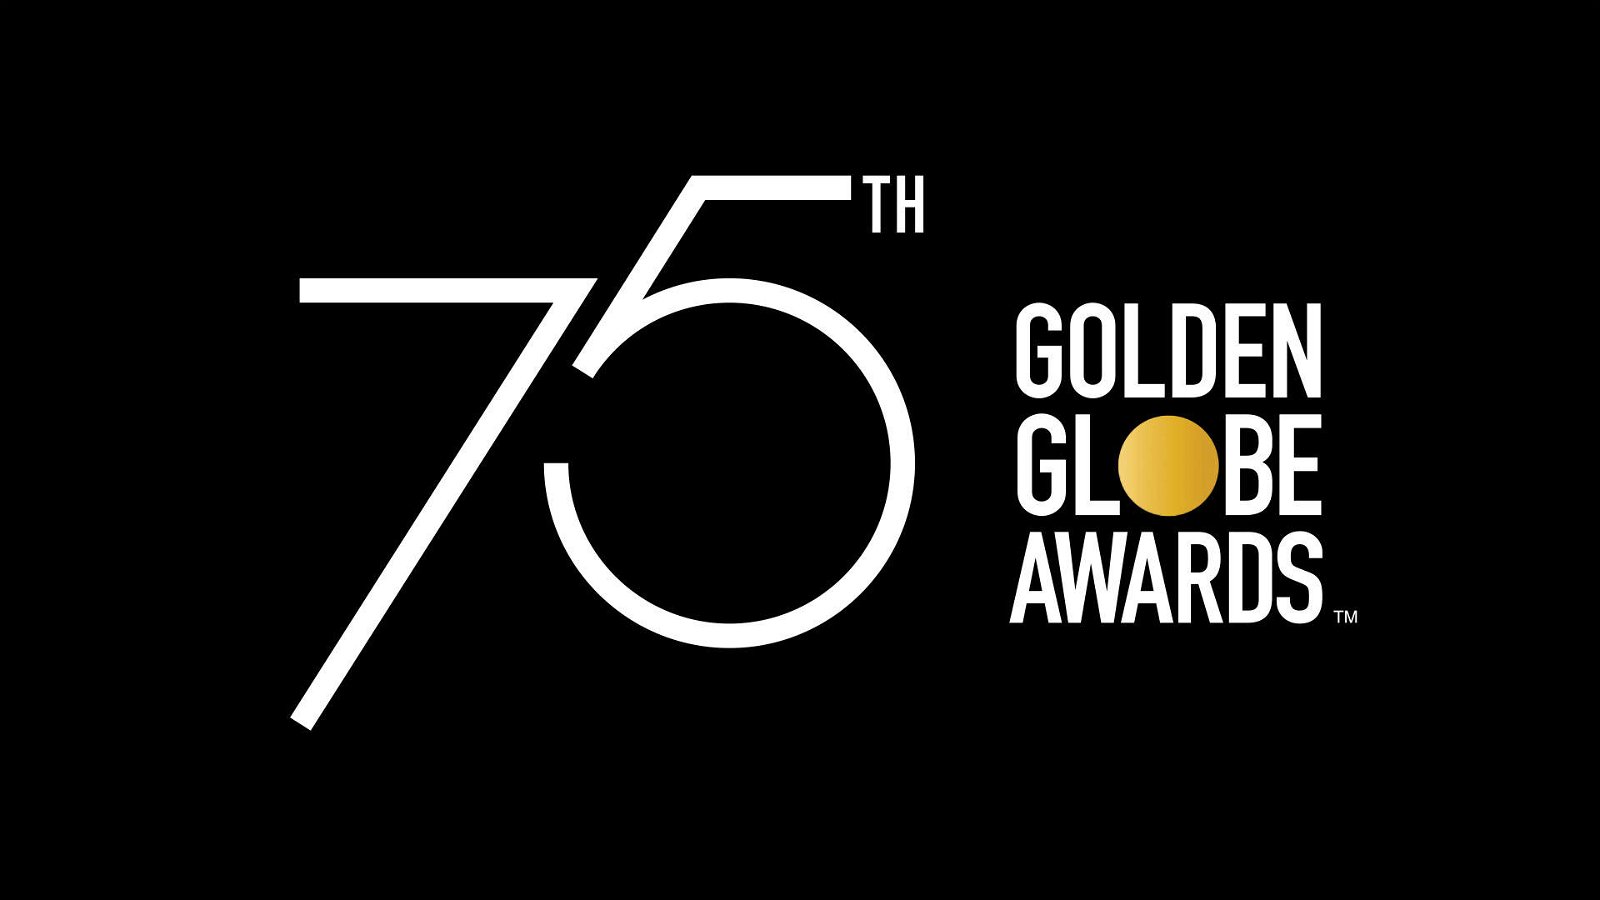 Immagine di Golden Globes 2019: tutti i vincitori e il trionfo per Bohemian Rhapsody